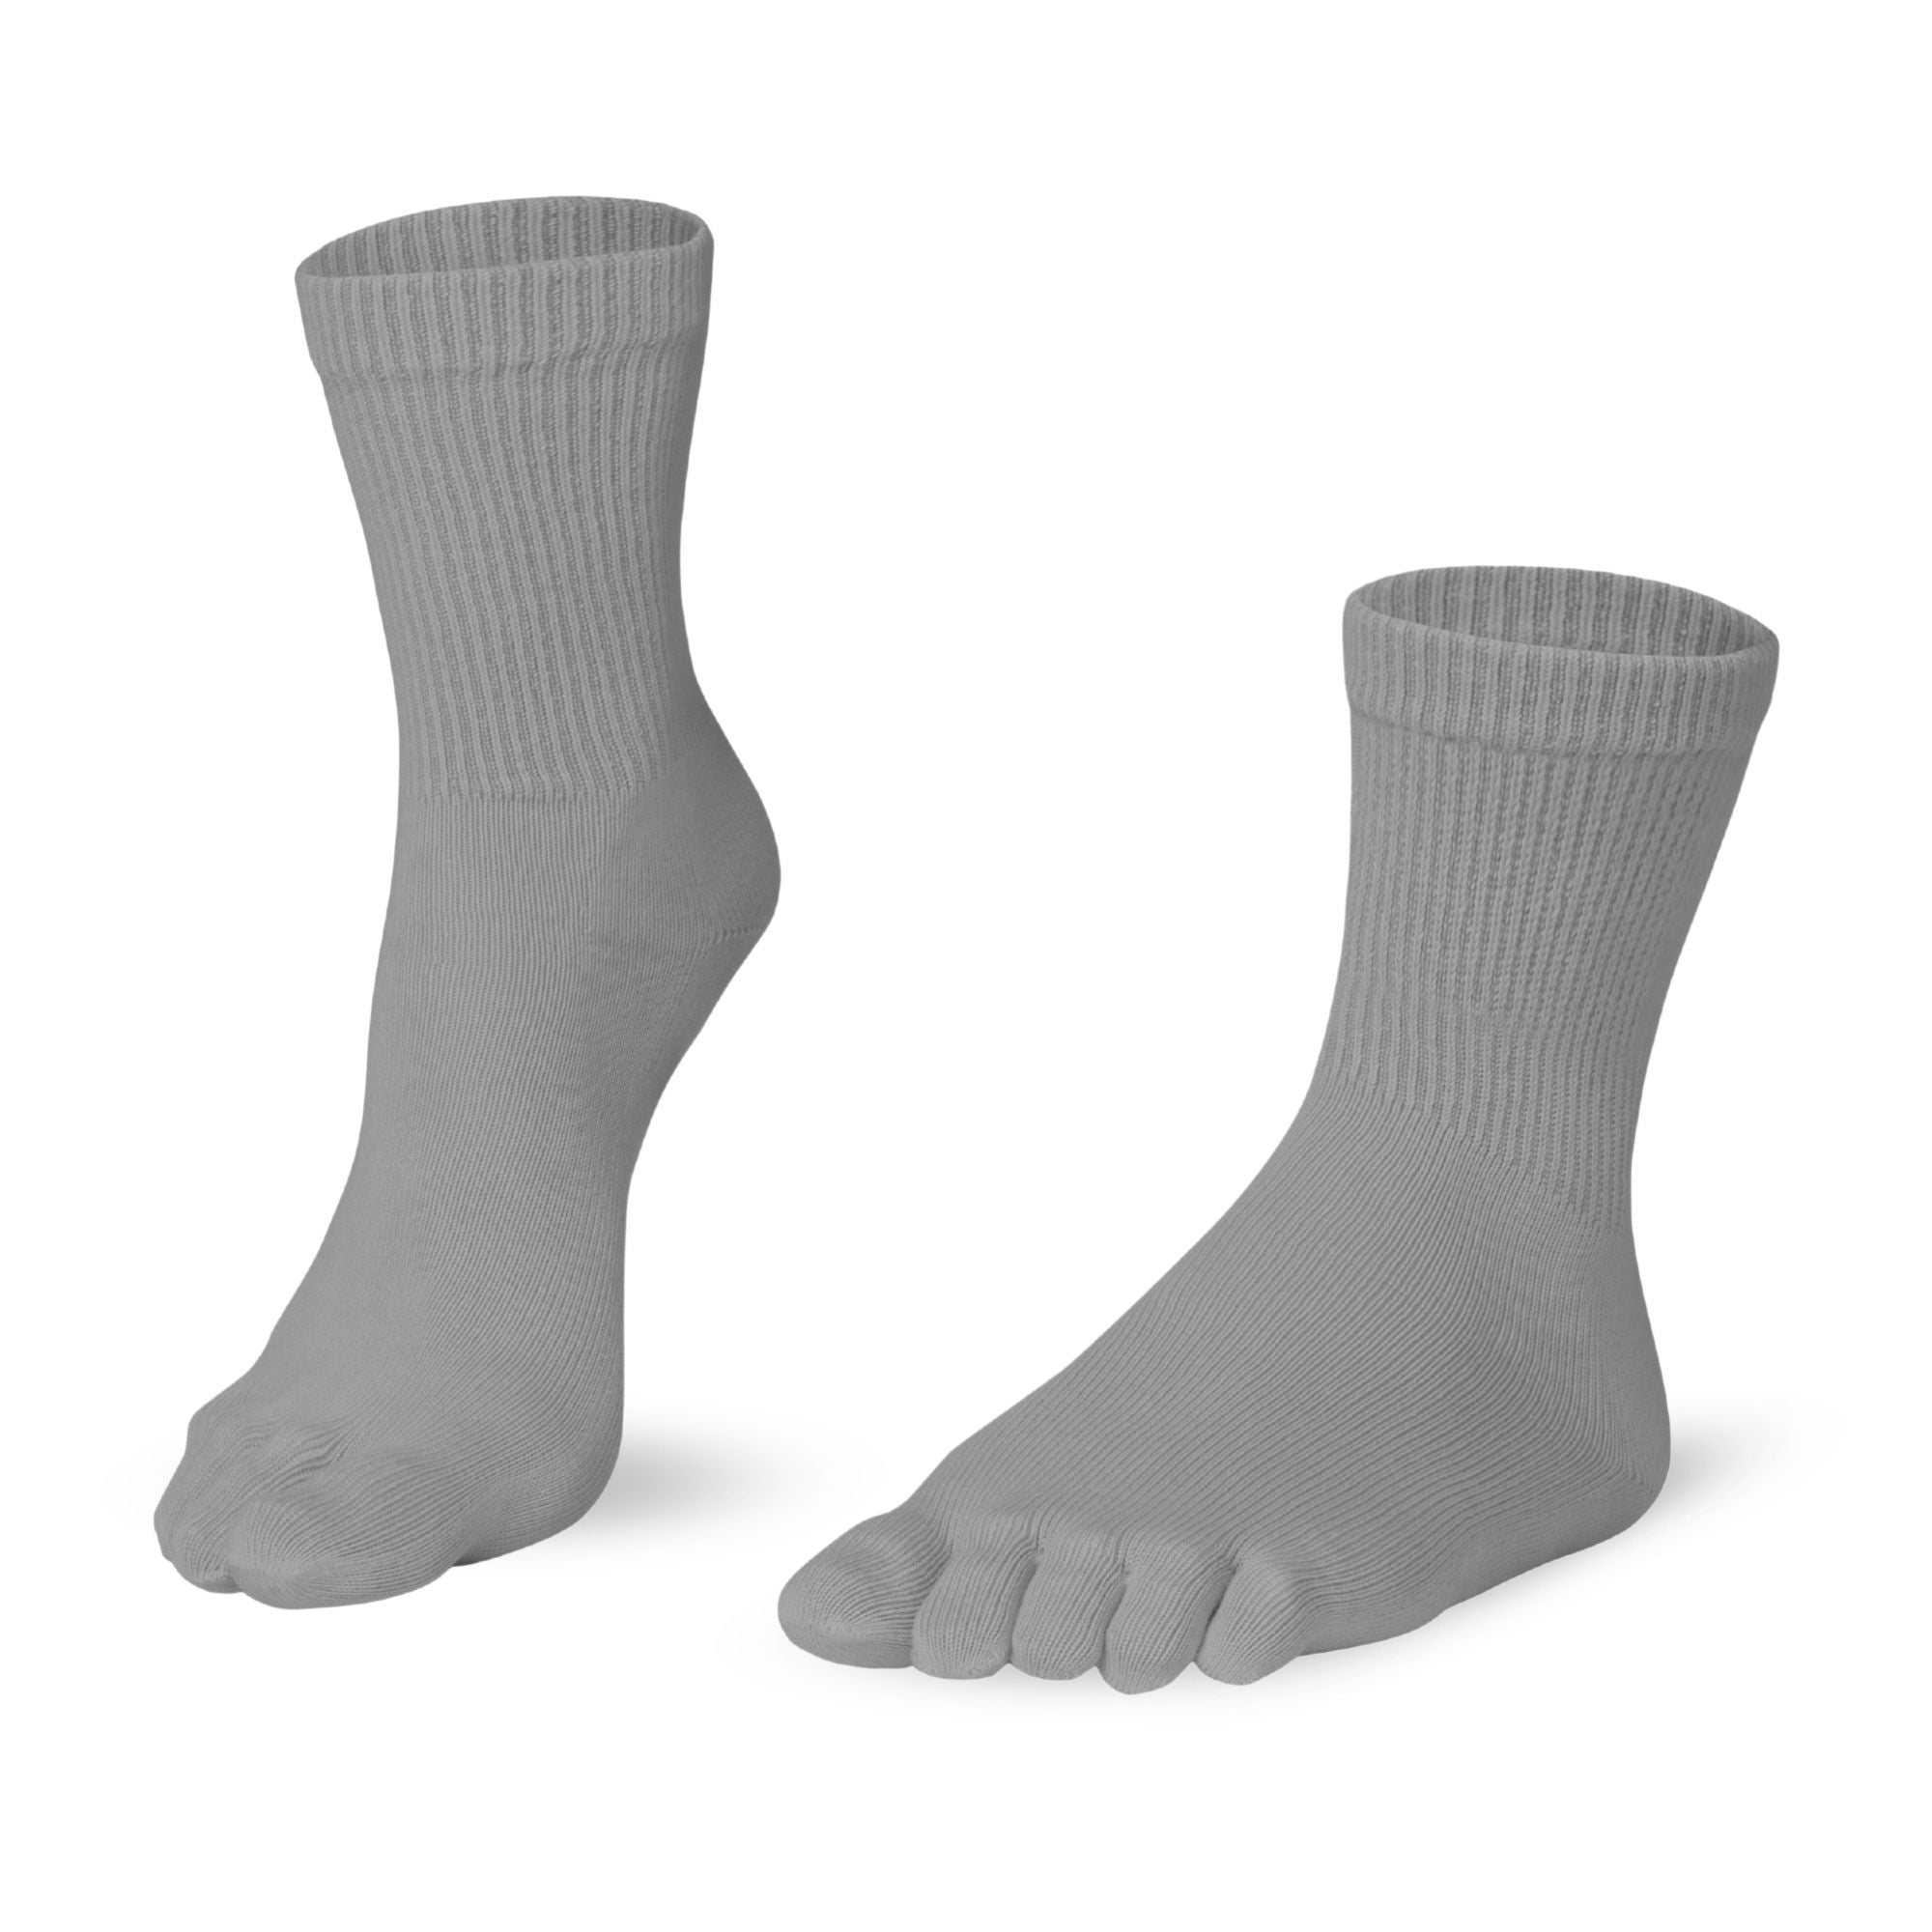 Essentials Relax, calf-length comfort socks - Knitido®.